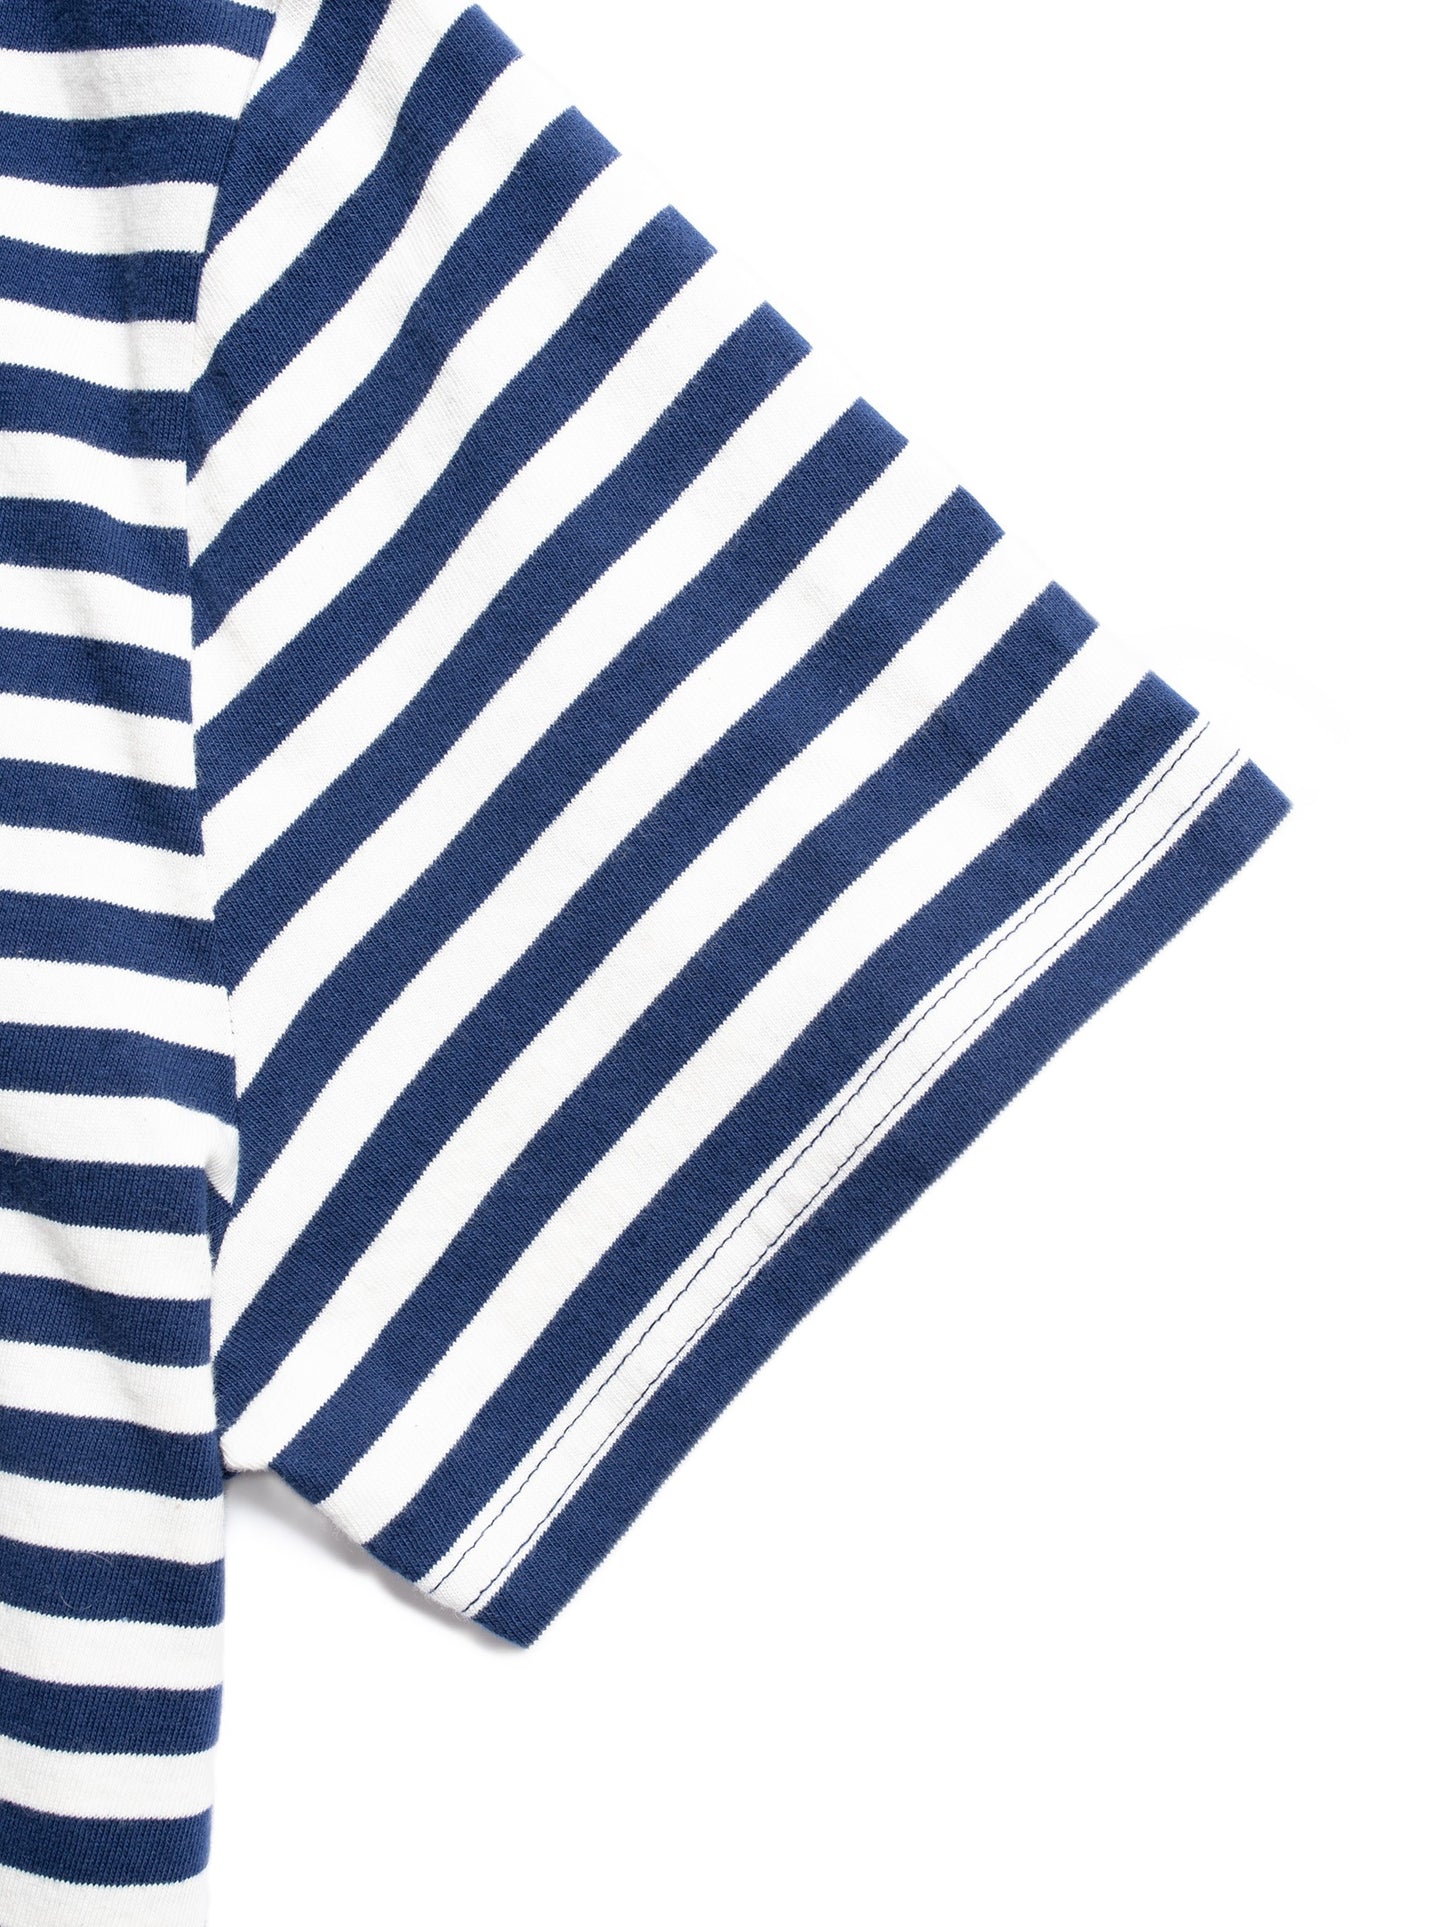 Nudie Jeans Leif Breton Stripe Tee Offwhite/Blue